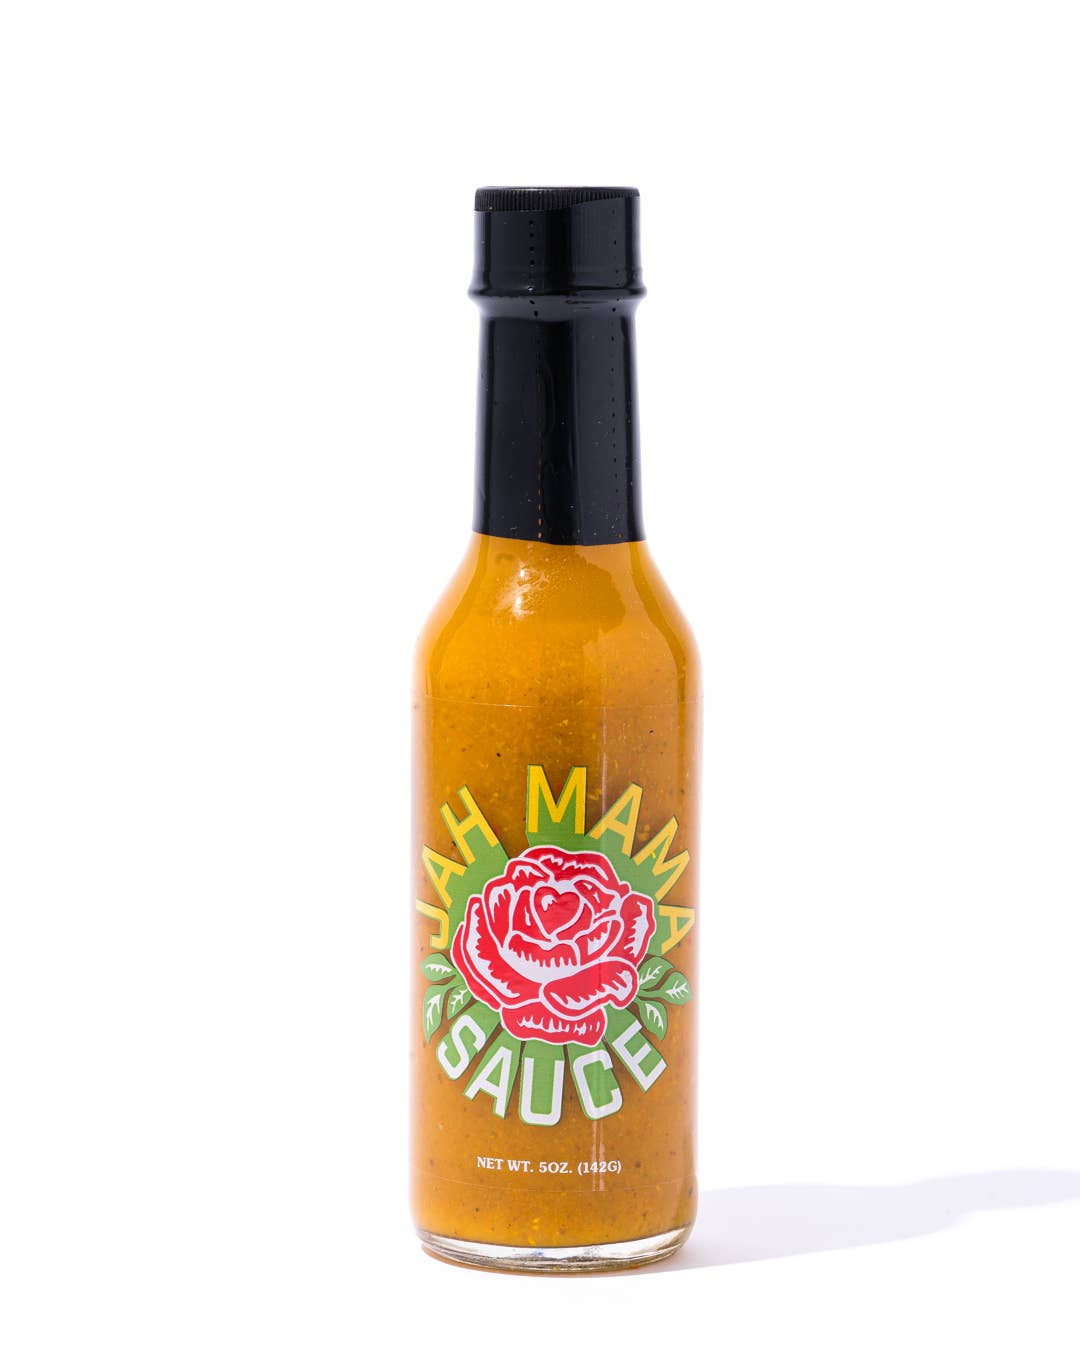 Jah Mama Sauce - 1 Case (Twelve 5oz. bottles)